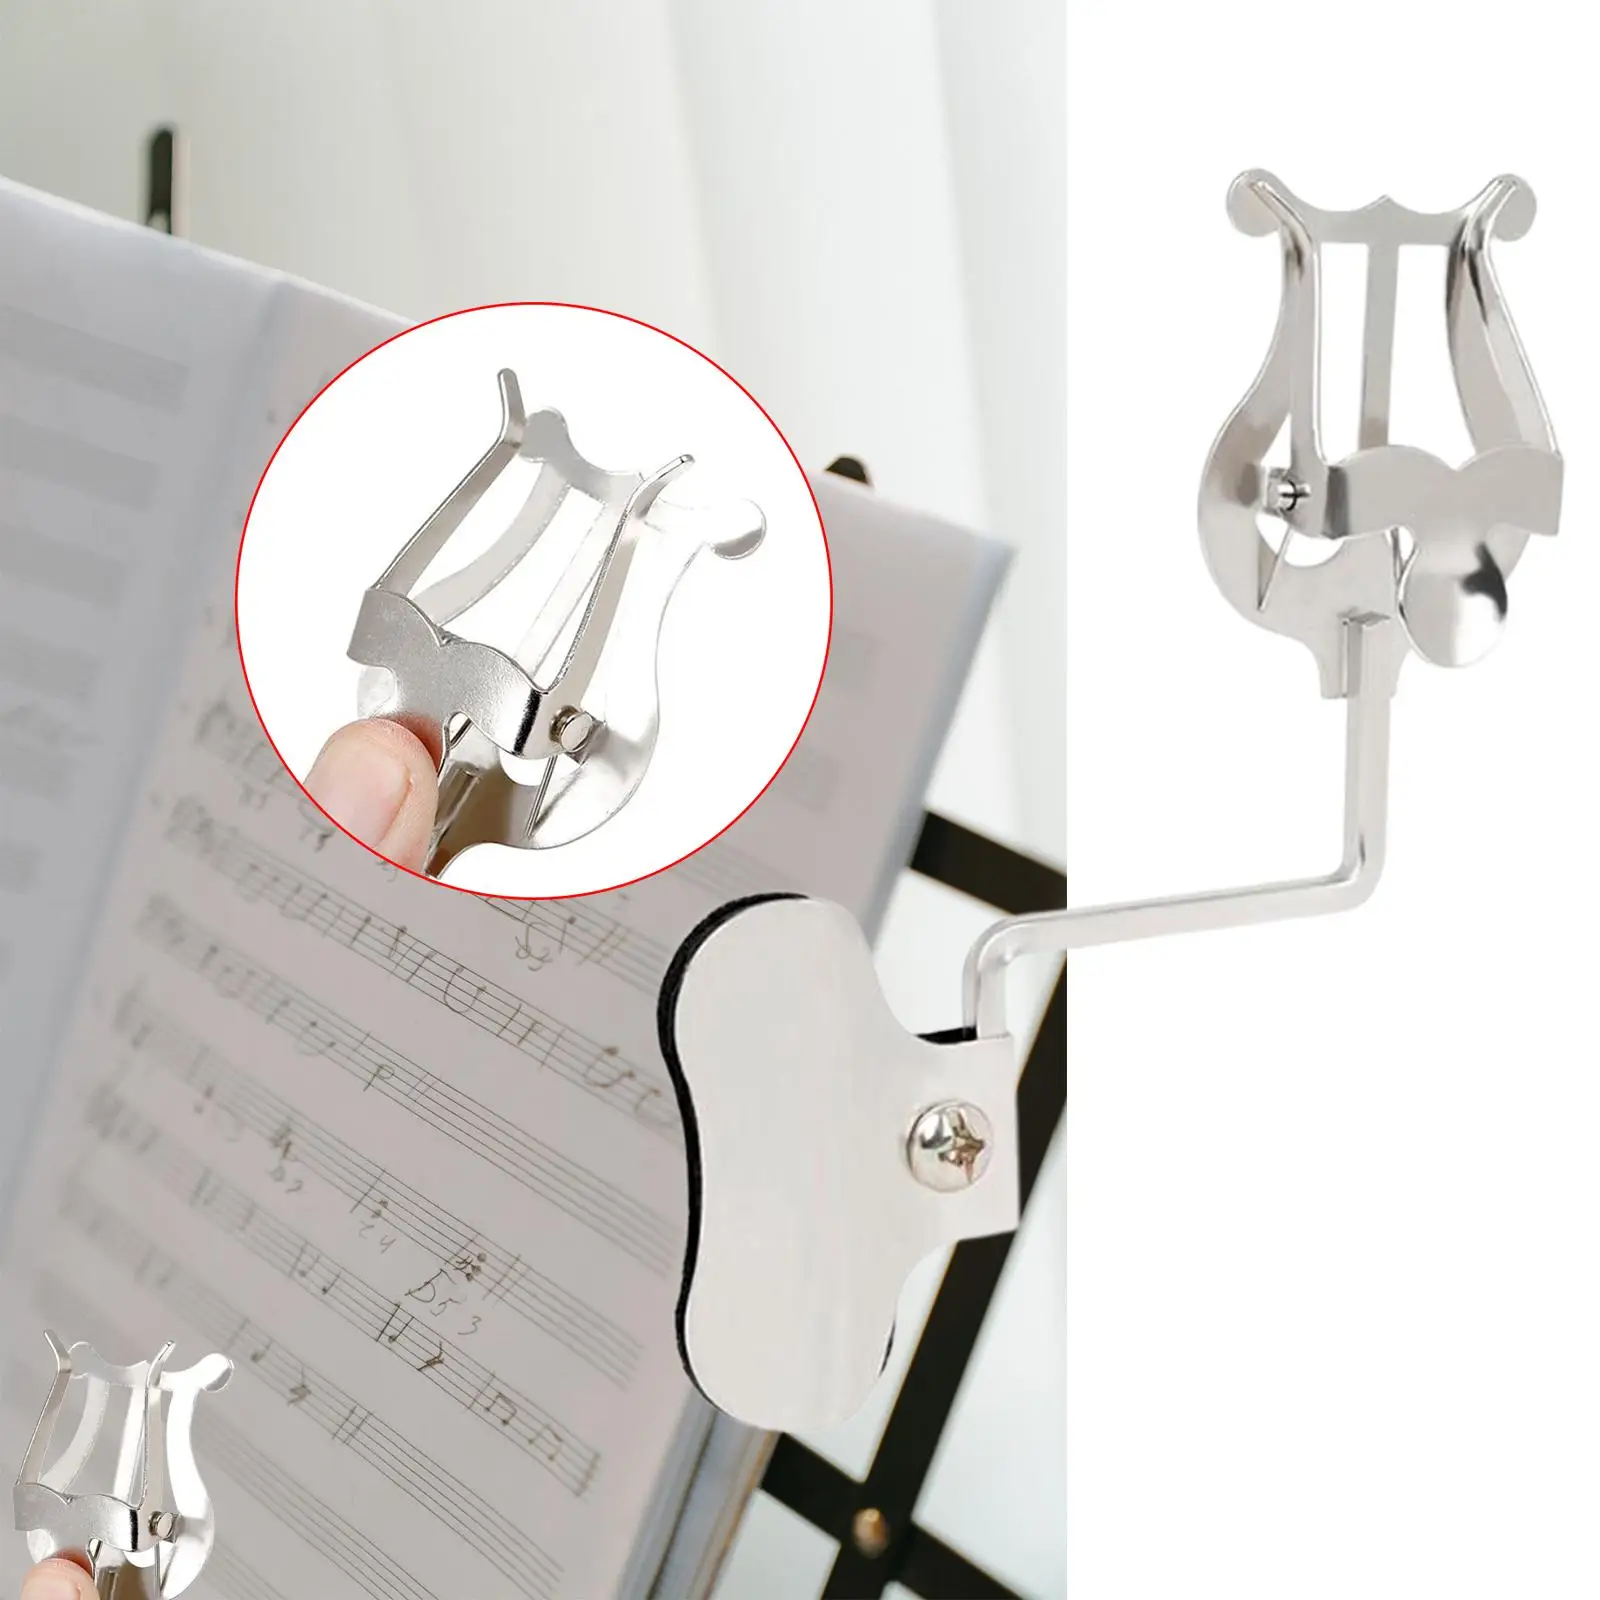 Trombone Music Clip Music Sheet Binder Portable Music Sheet Clip Music Clip Clamp On Holder for Clarinet Exercise Saxophone Gift